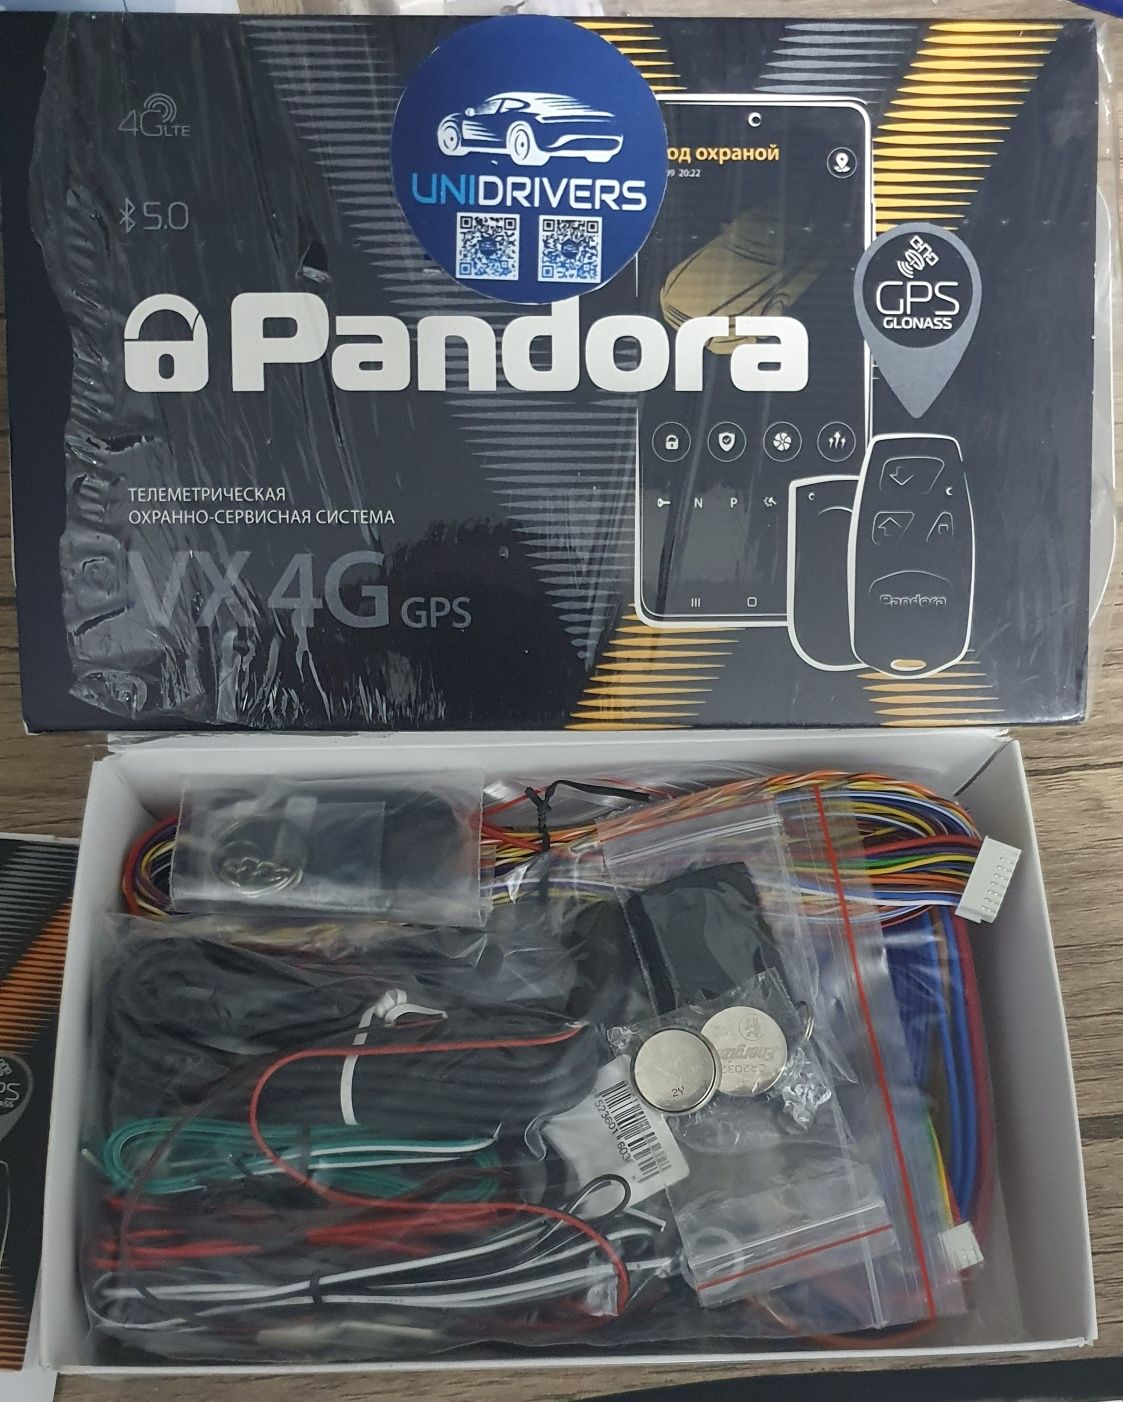 Pandora VX4G gps v2 сотилади